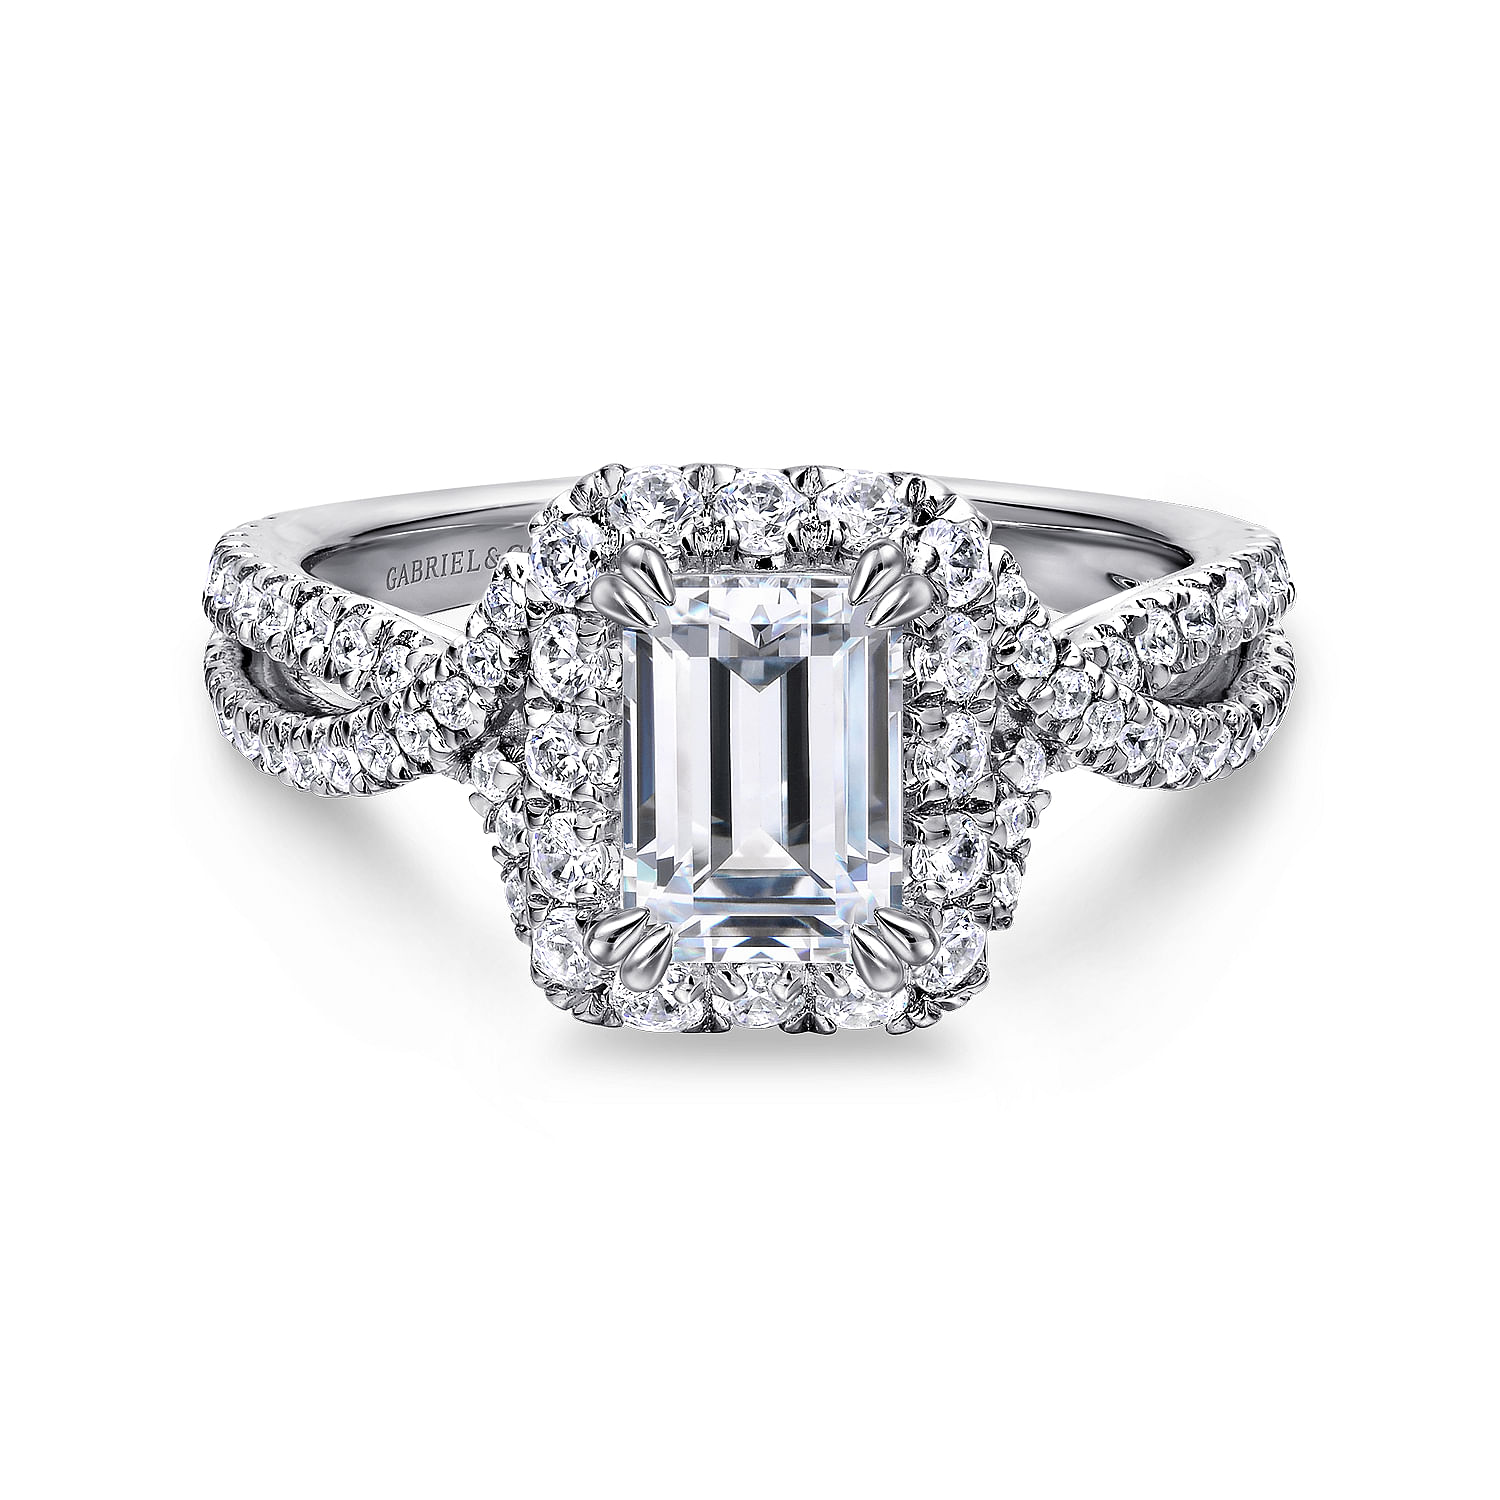 Gabriel - 14K White Gold Halo Emerald Cut Diamond Engagement Ring